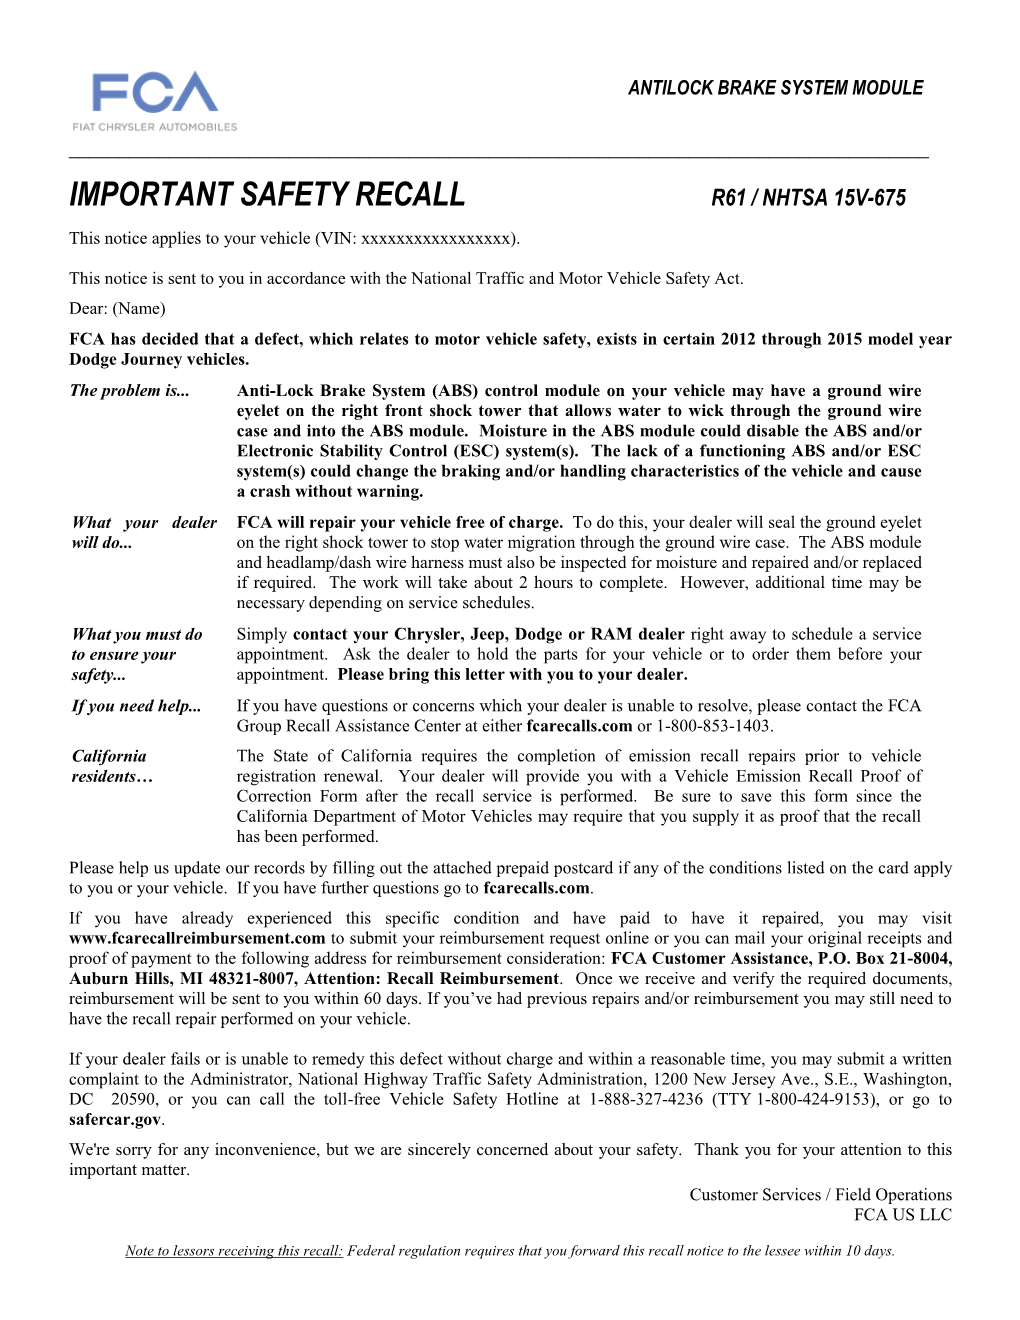 Important Safety Recall R61 / Nhtsa 15V-675